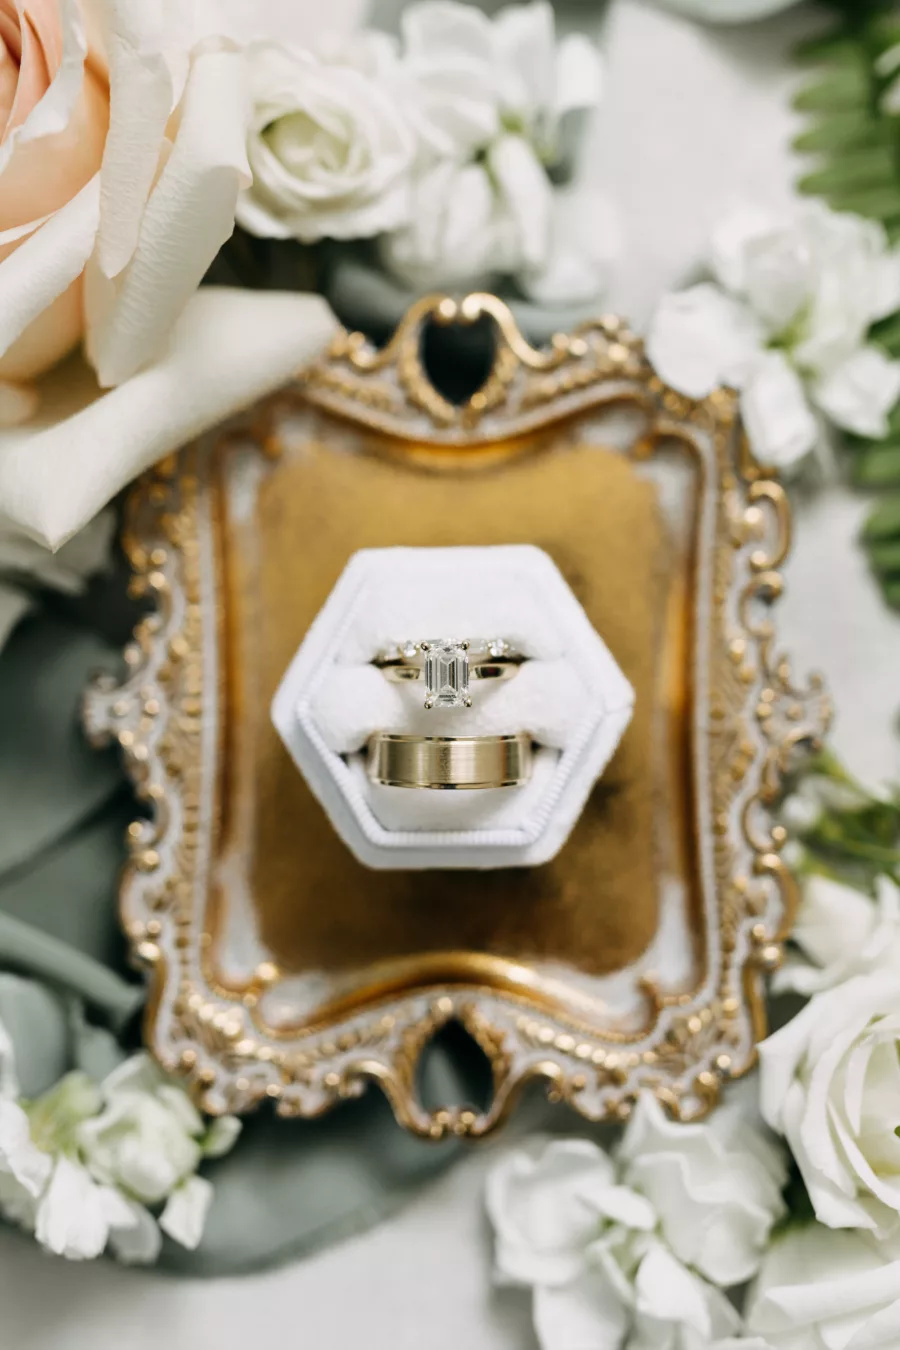 Emerald Cut Diamond Engagement Ring Inspiration | Gold Wedding Band Ideas